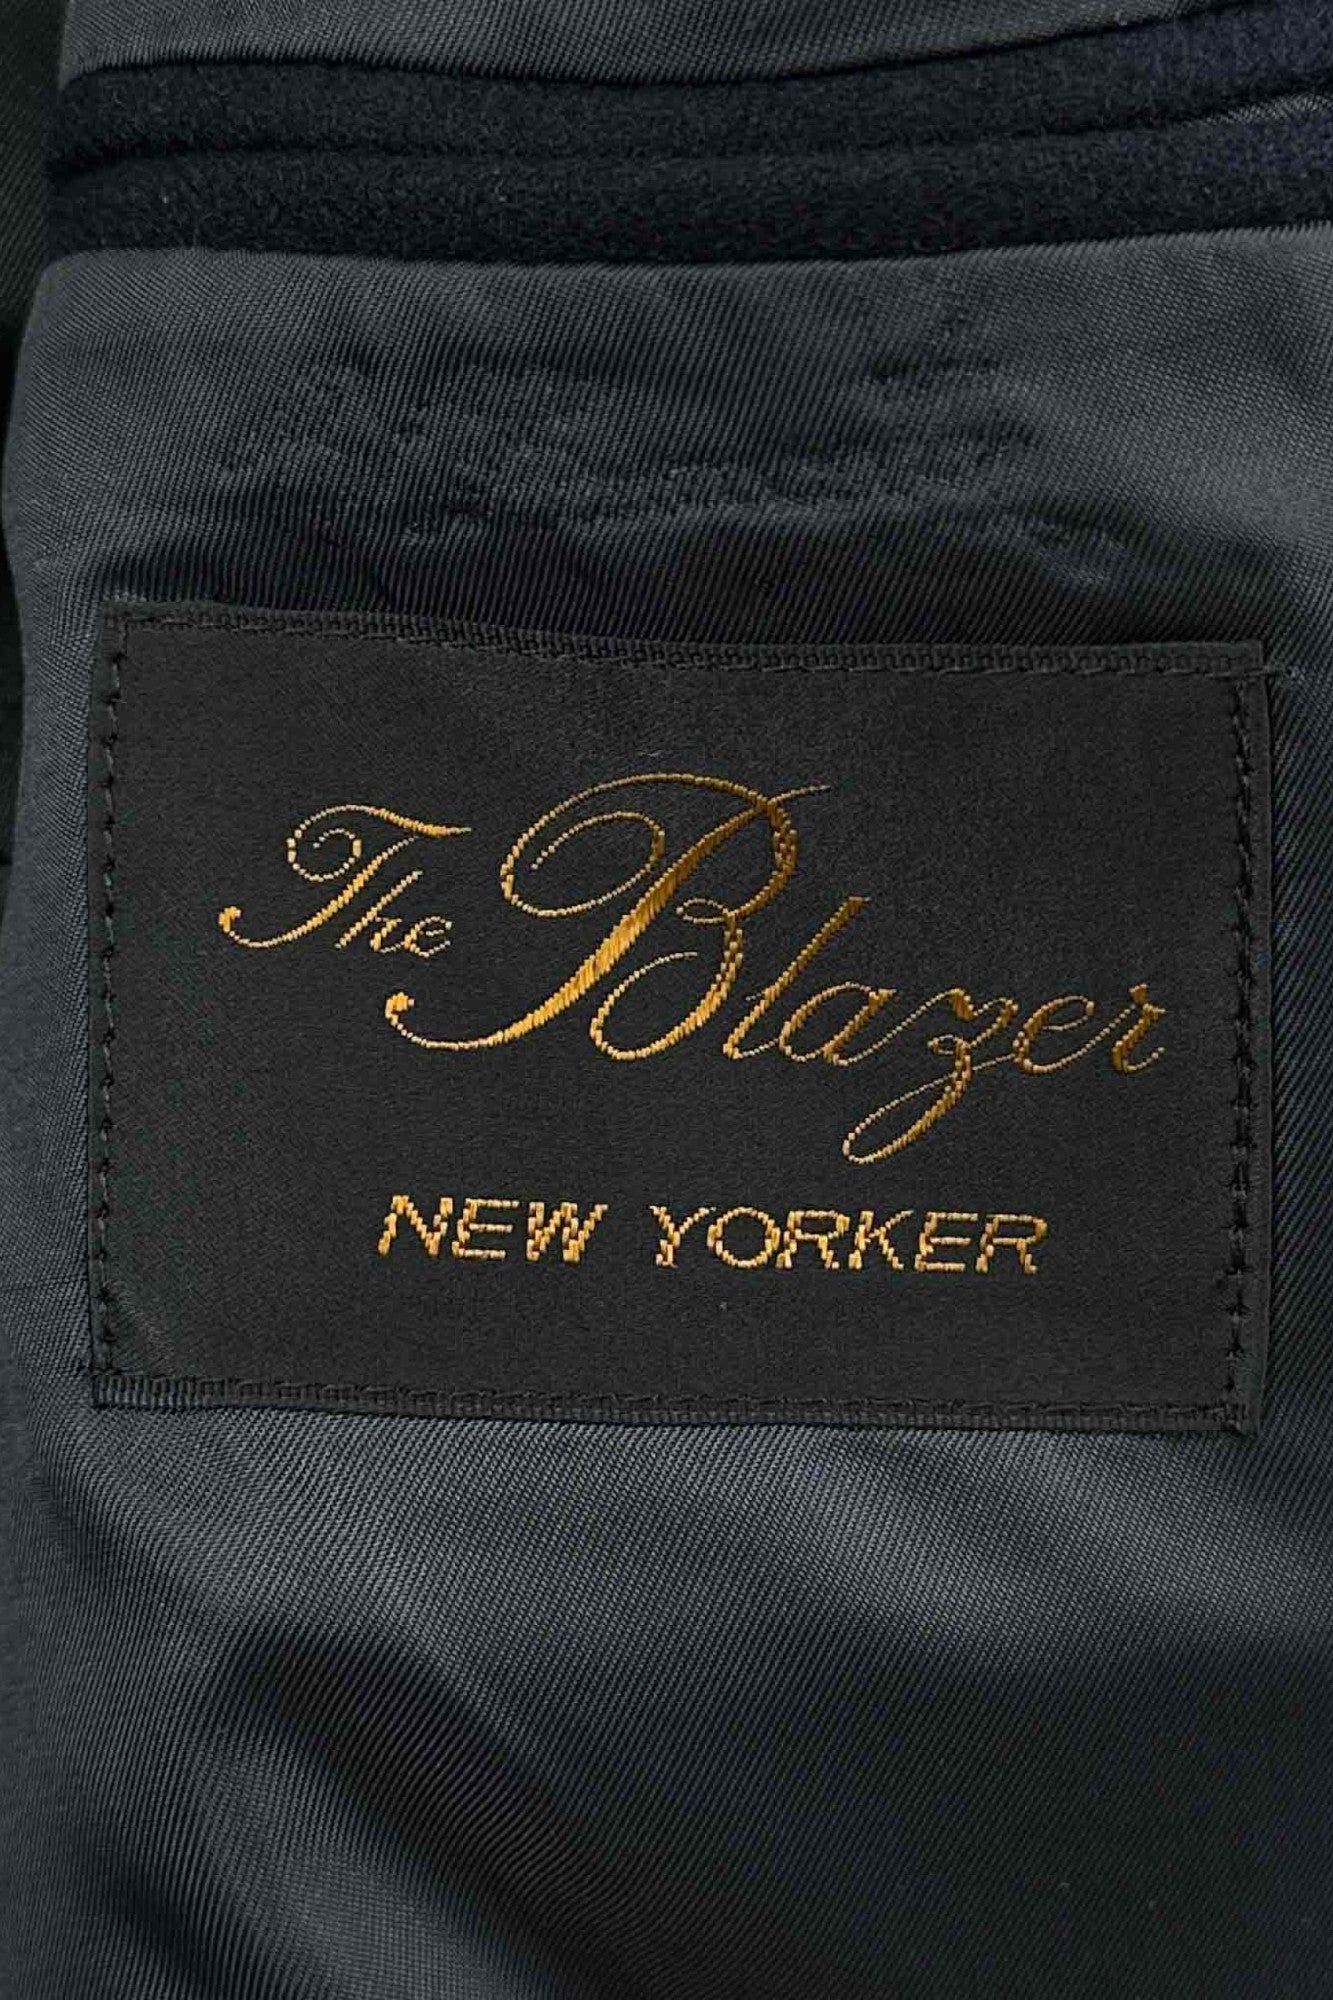 NEWYORKER navy wool jacket